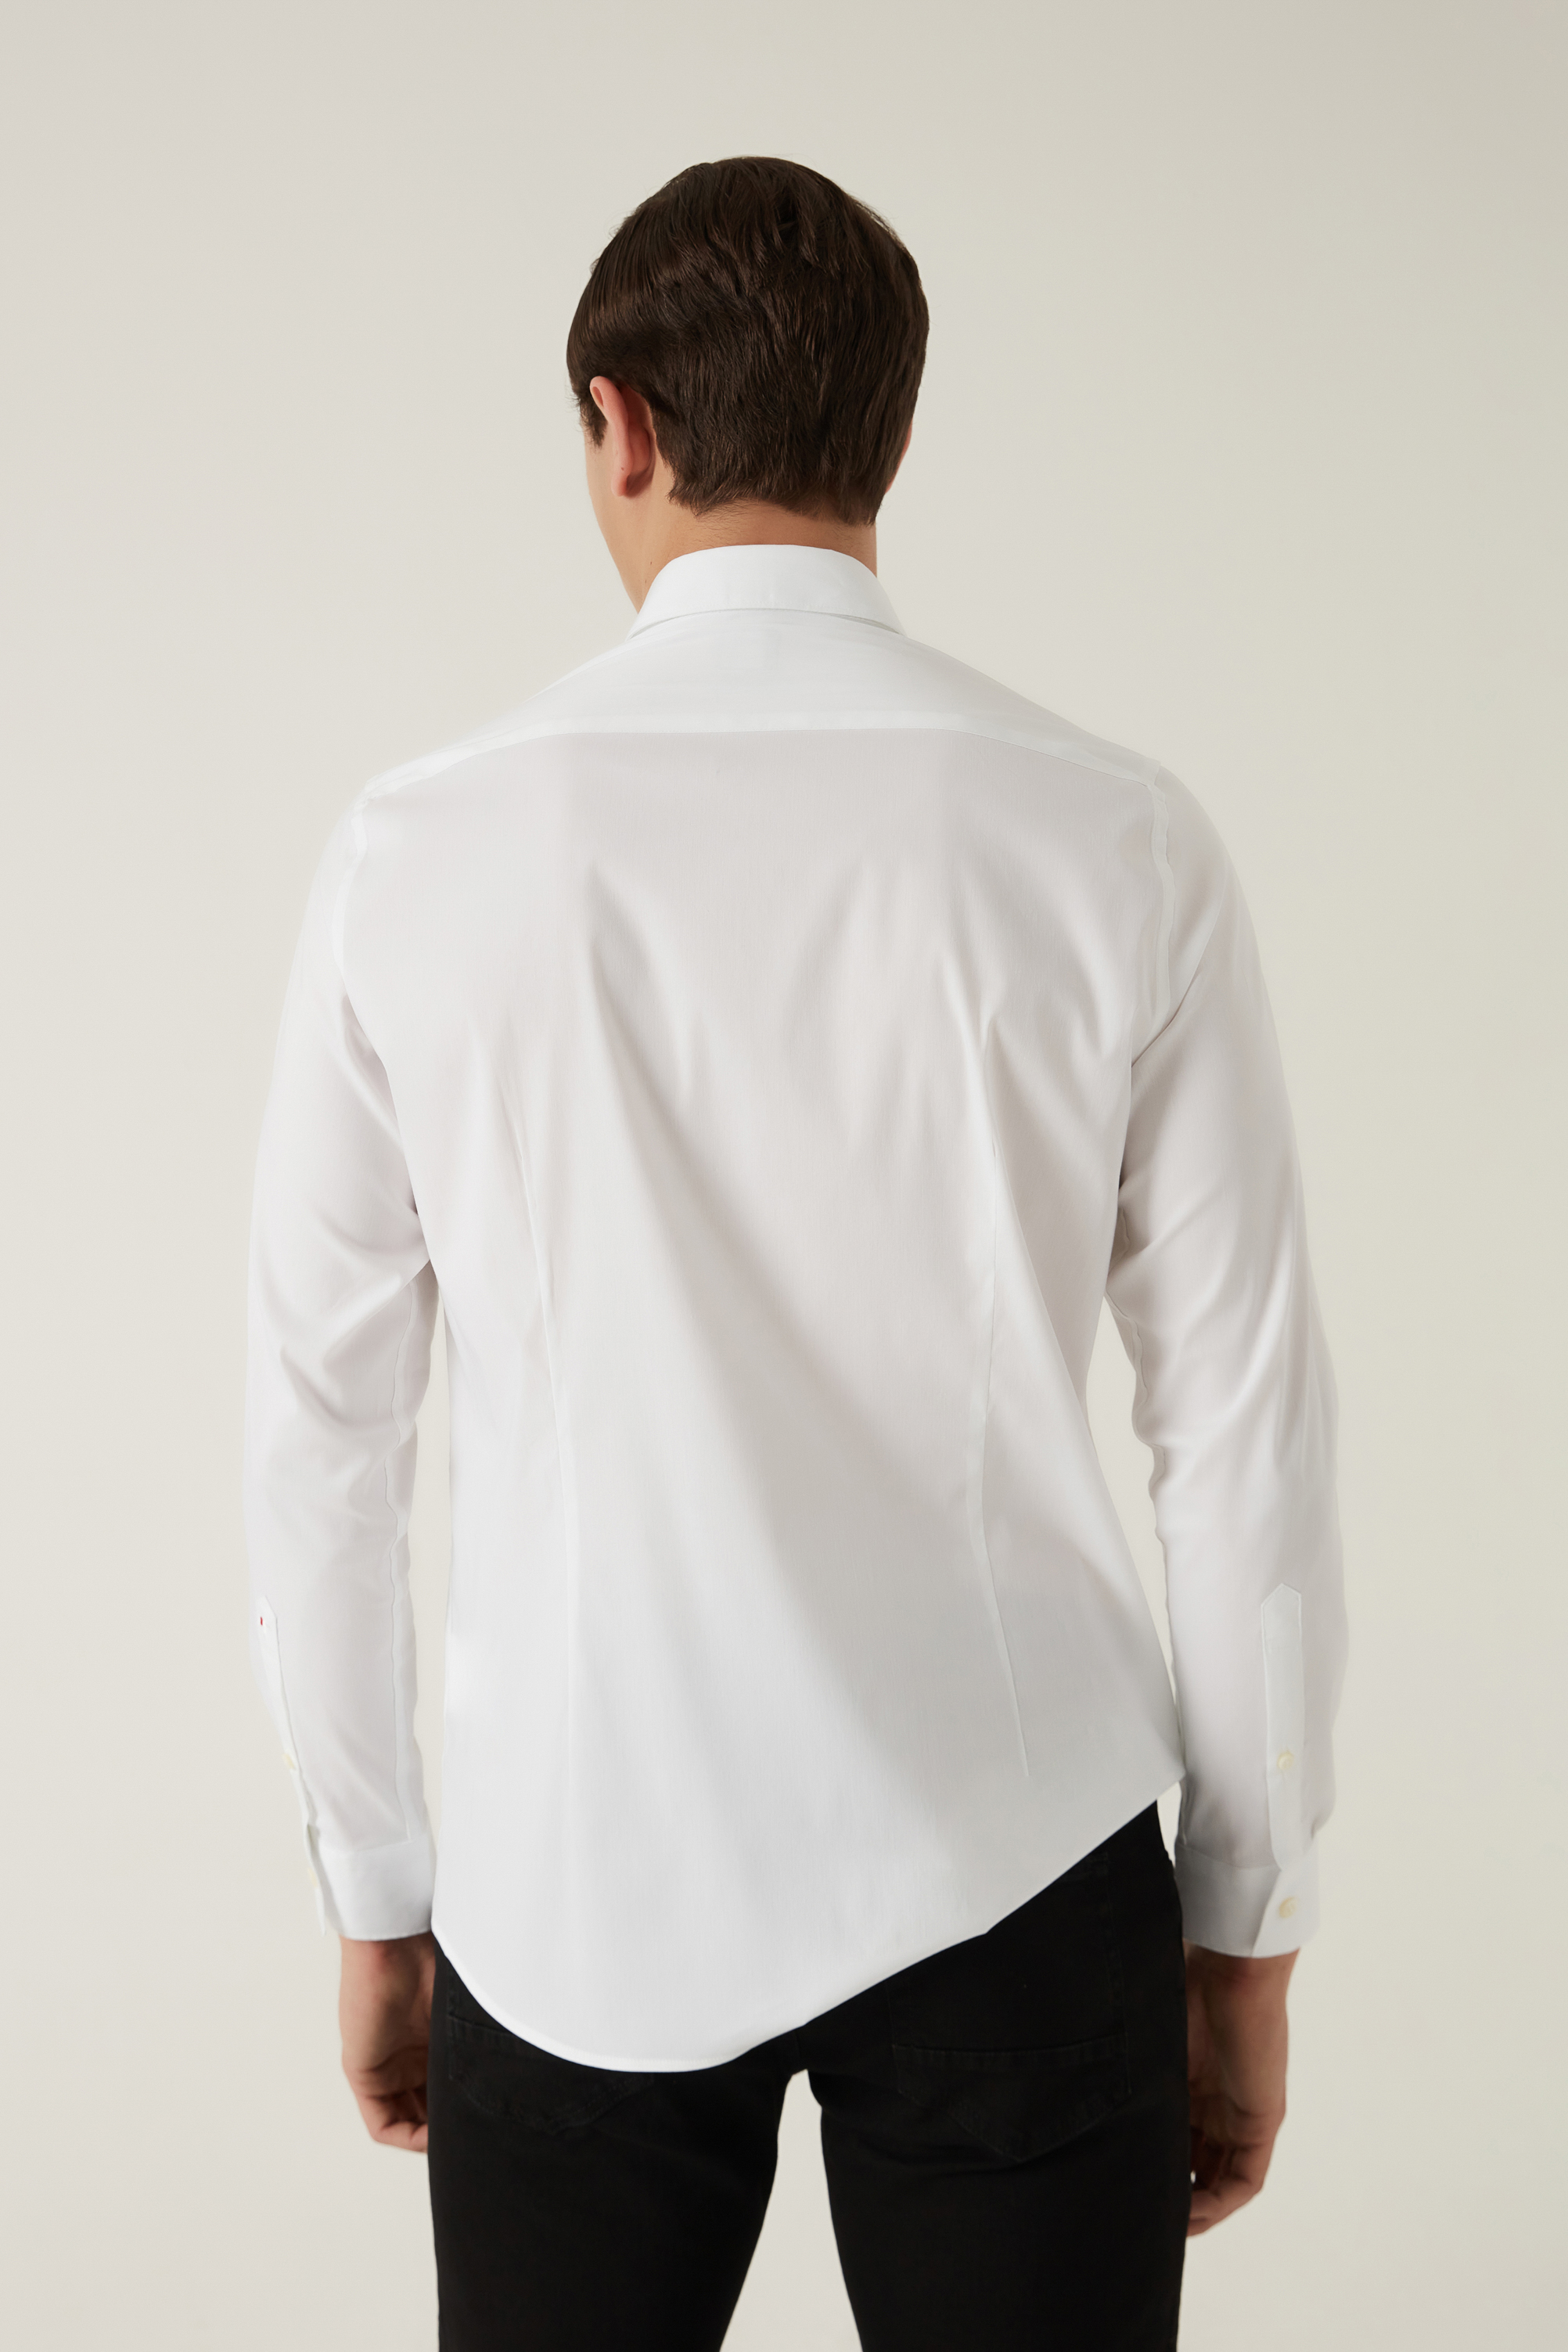 Damat Tween Tween Slim Fit Beyaz Gömlek. 4